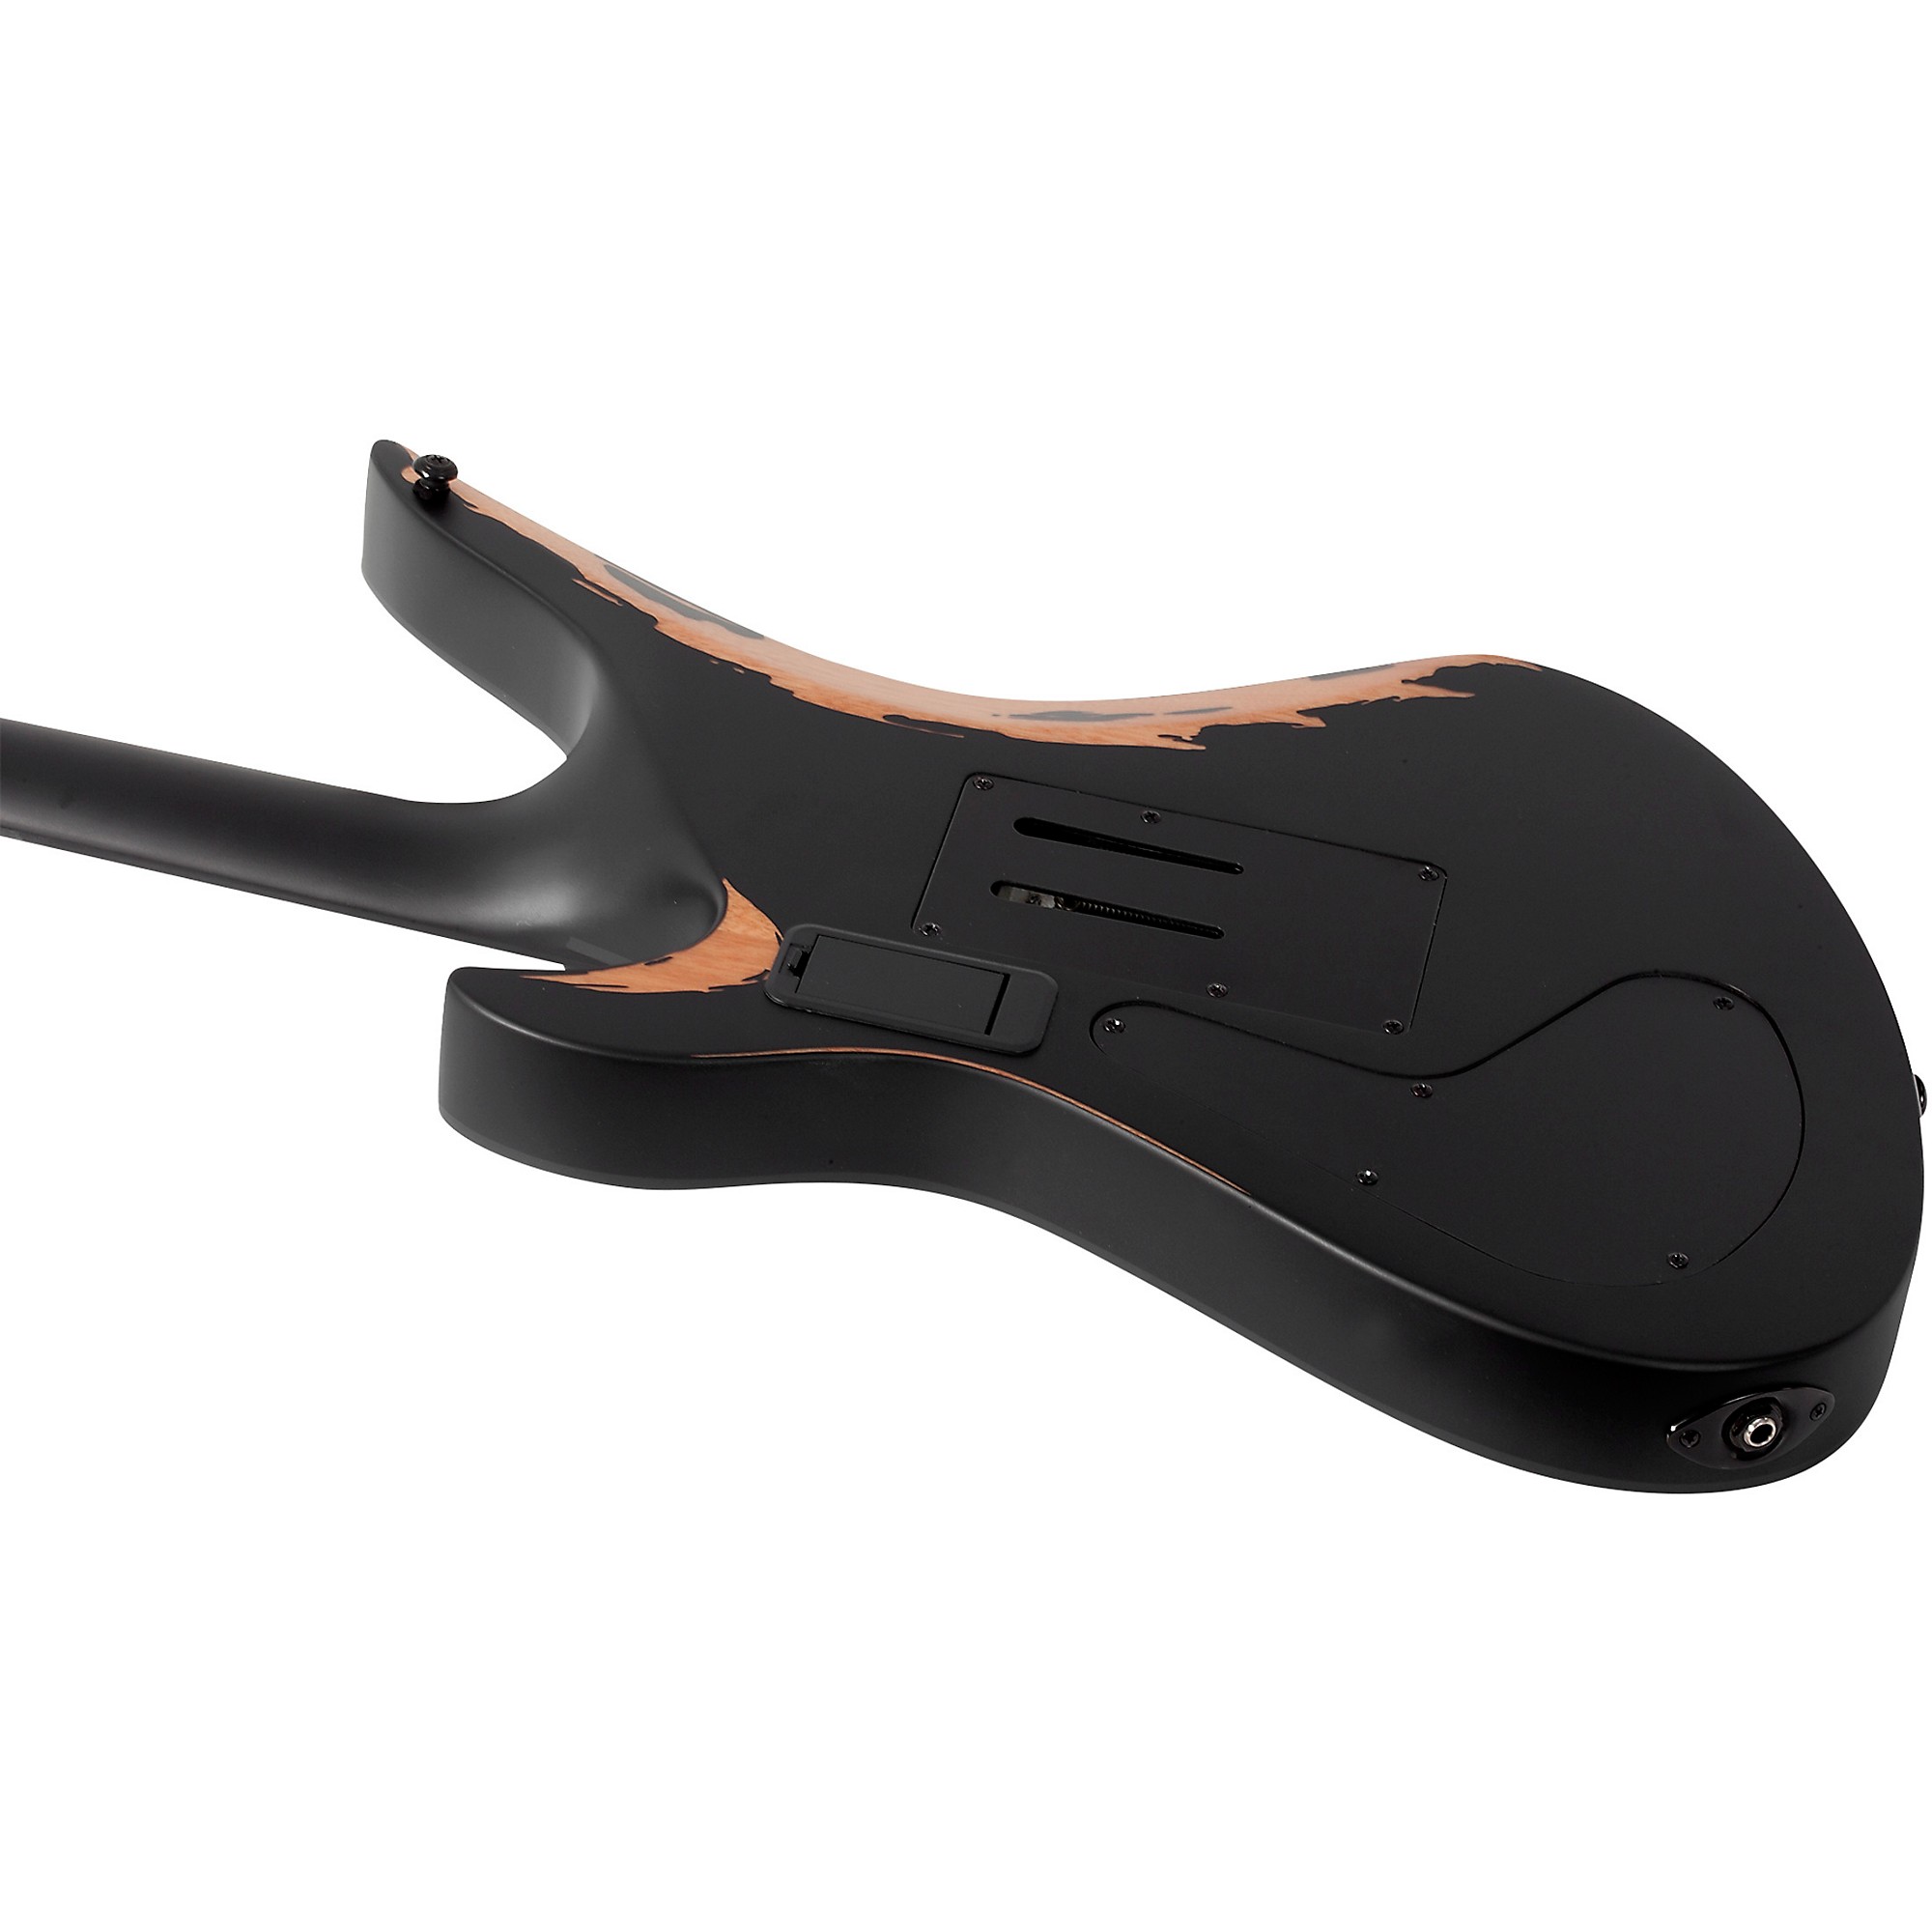 Schecter Guitar Research Synyster Gates Custom-S Relic Электрогитара состаренная сатиновая черная